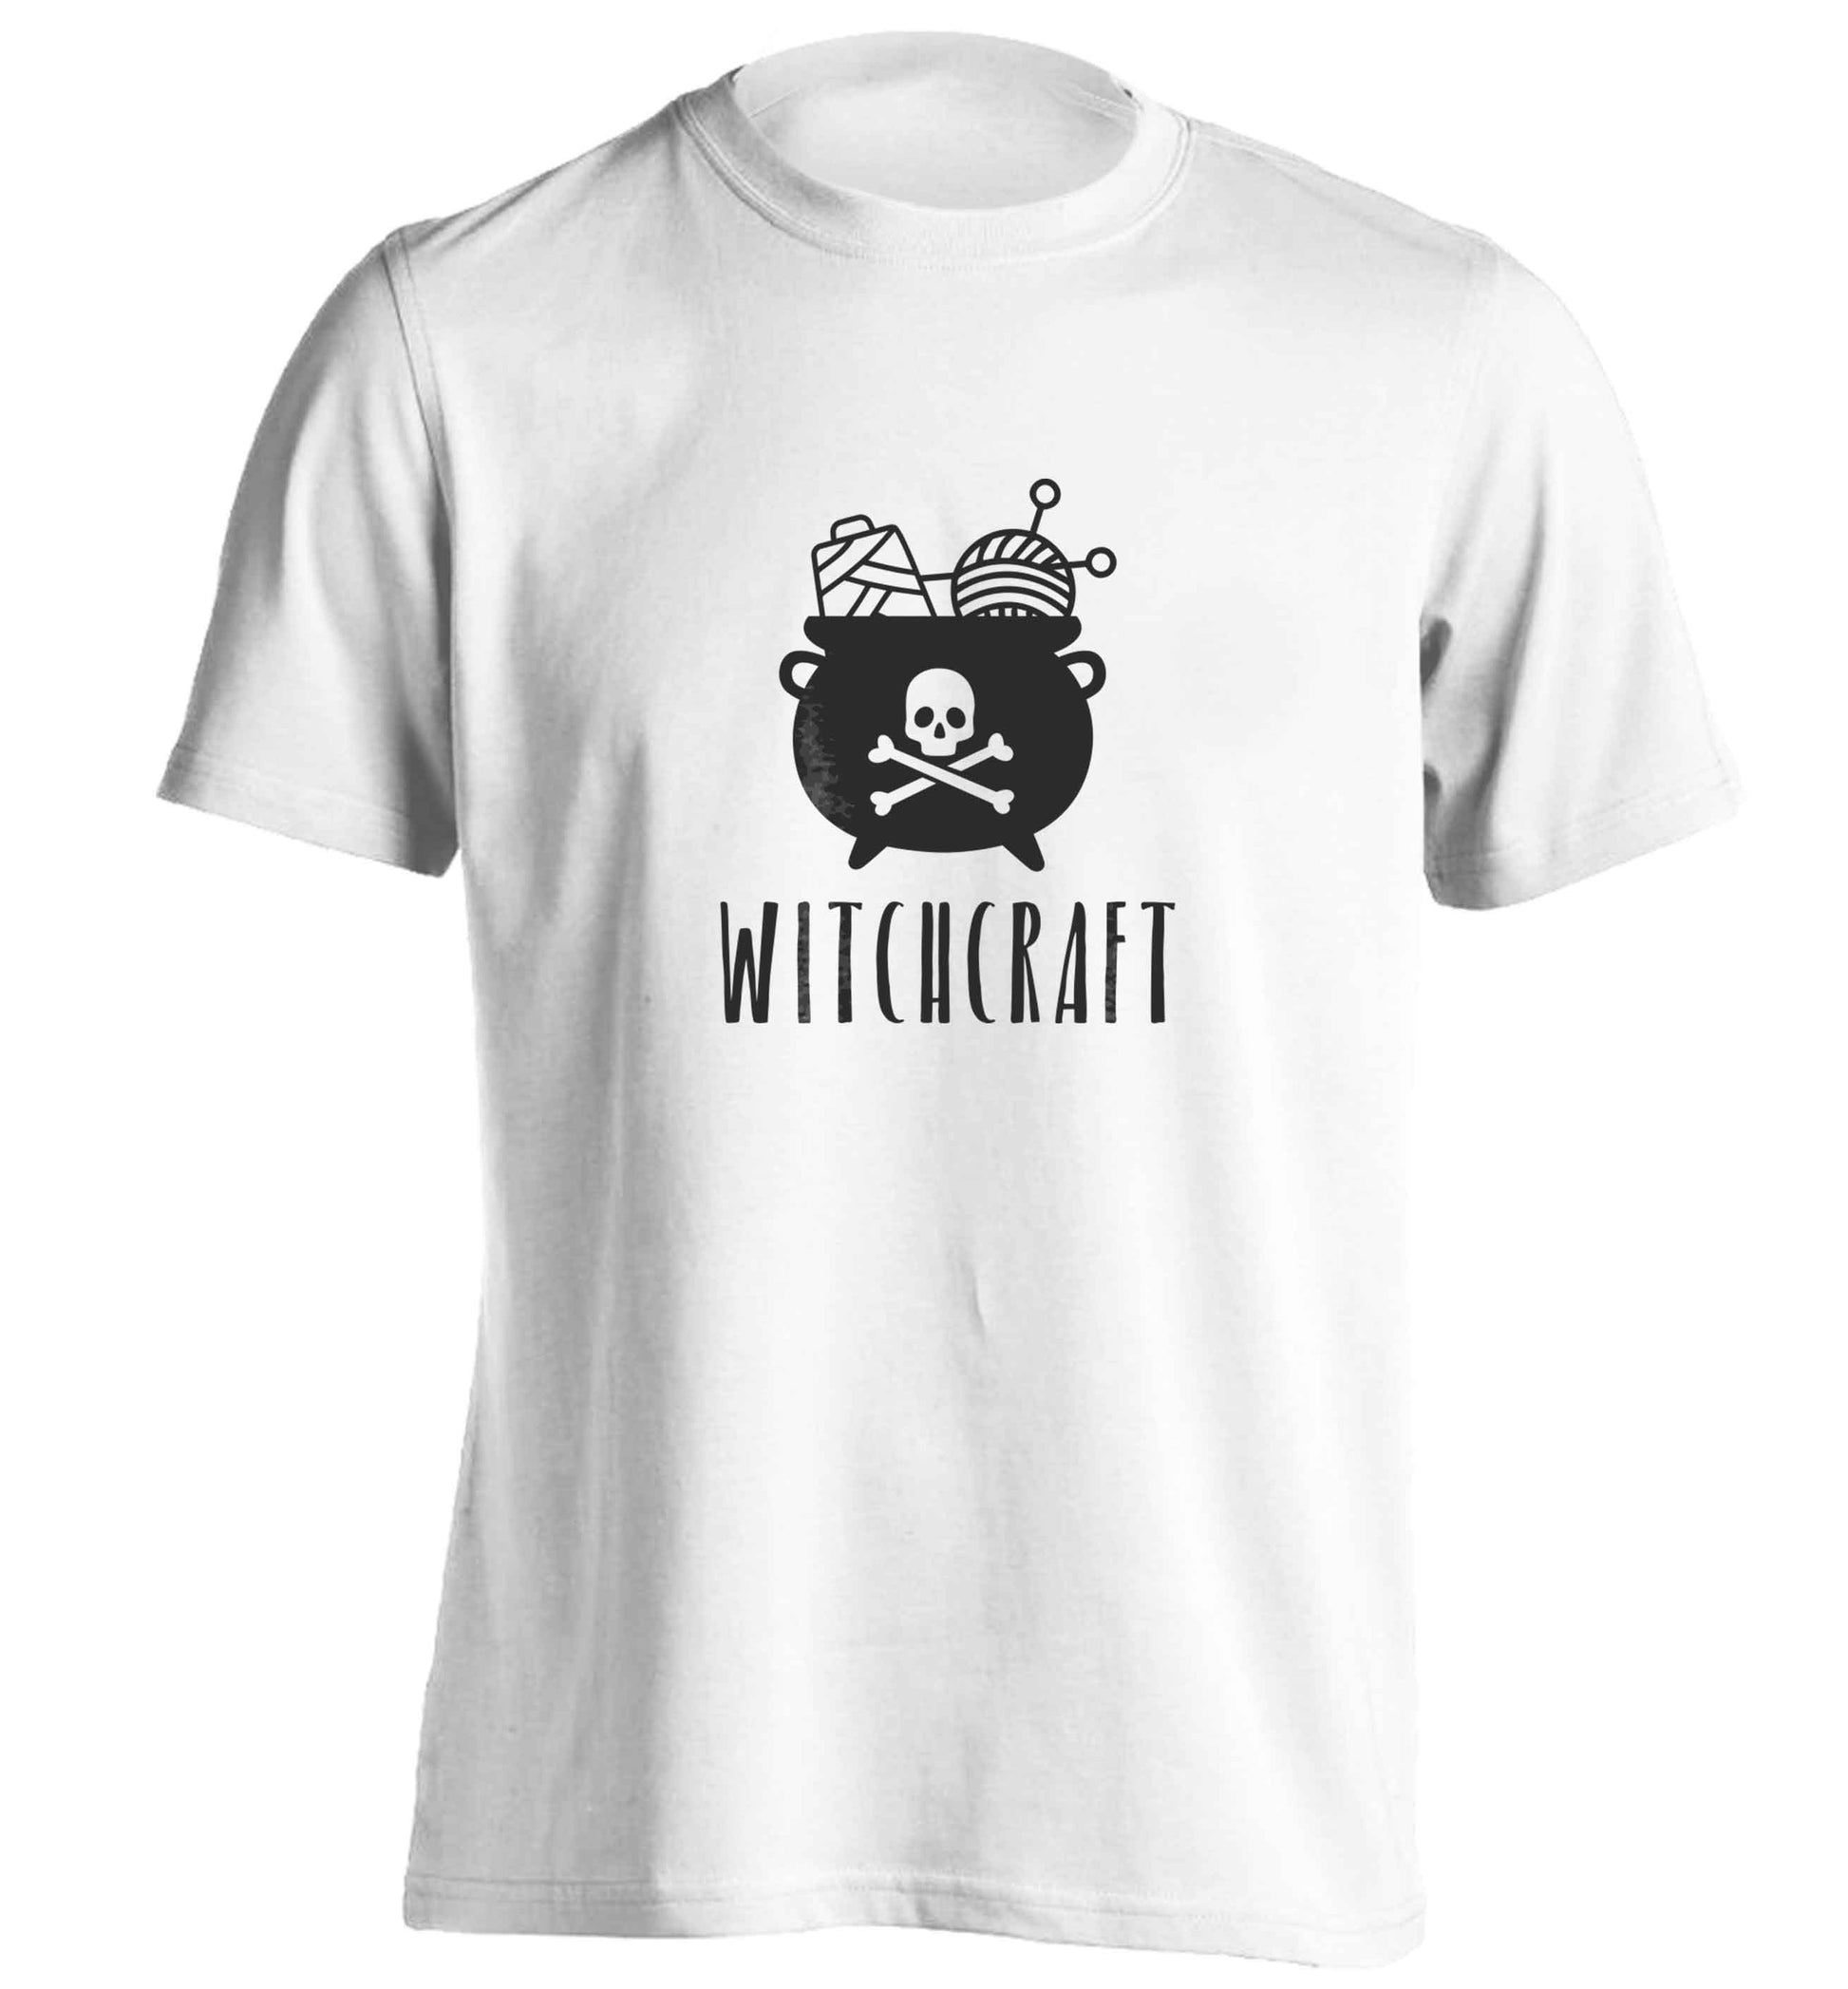 Witchcraft adults unisex white Tshirt 2XL